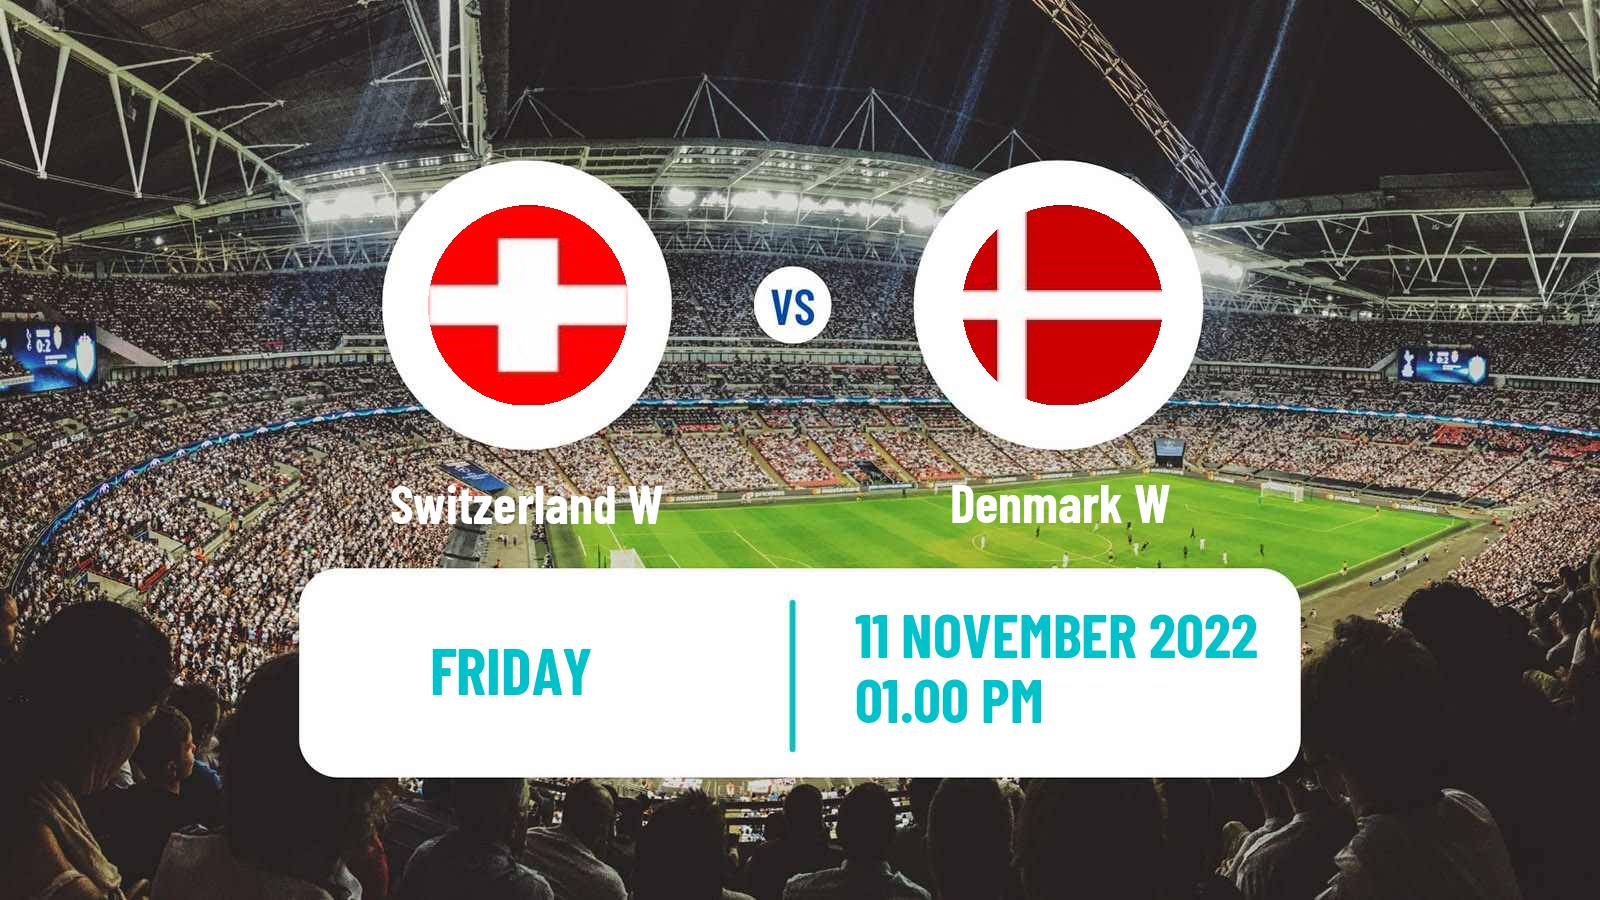 Soccer Friendly International Women Switzerland W - Denmark W